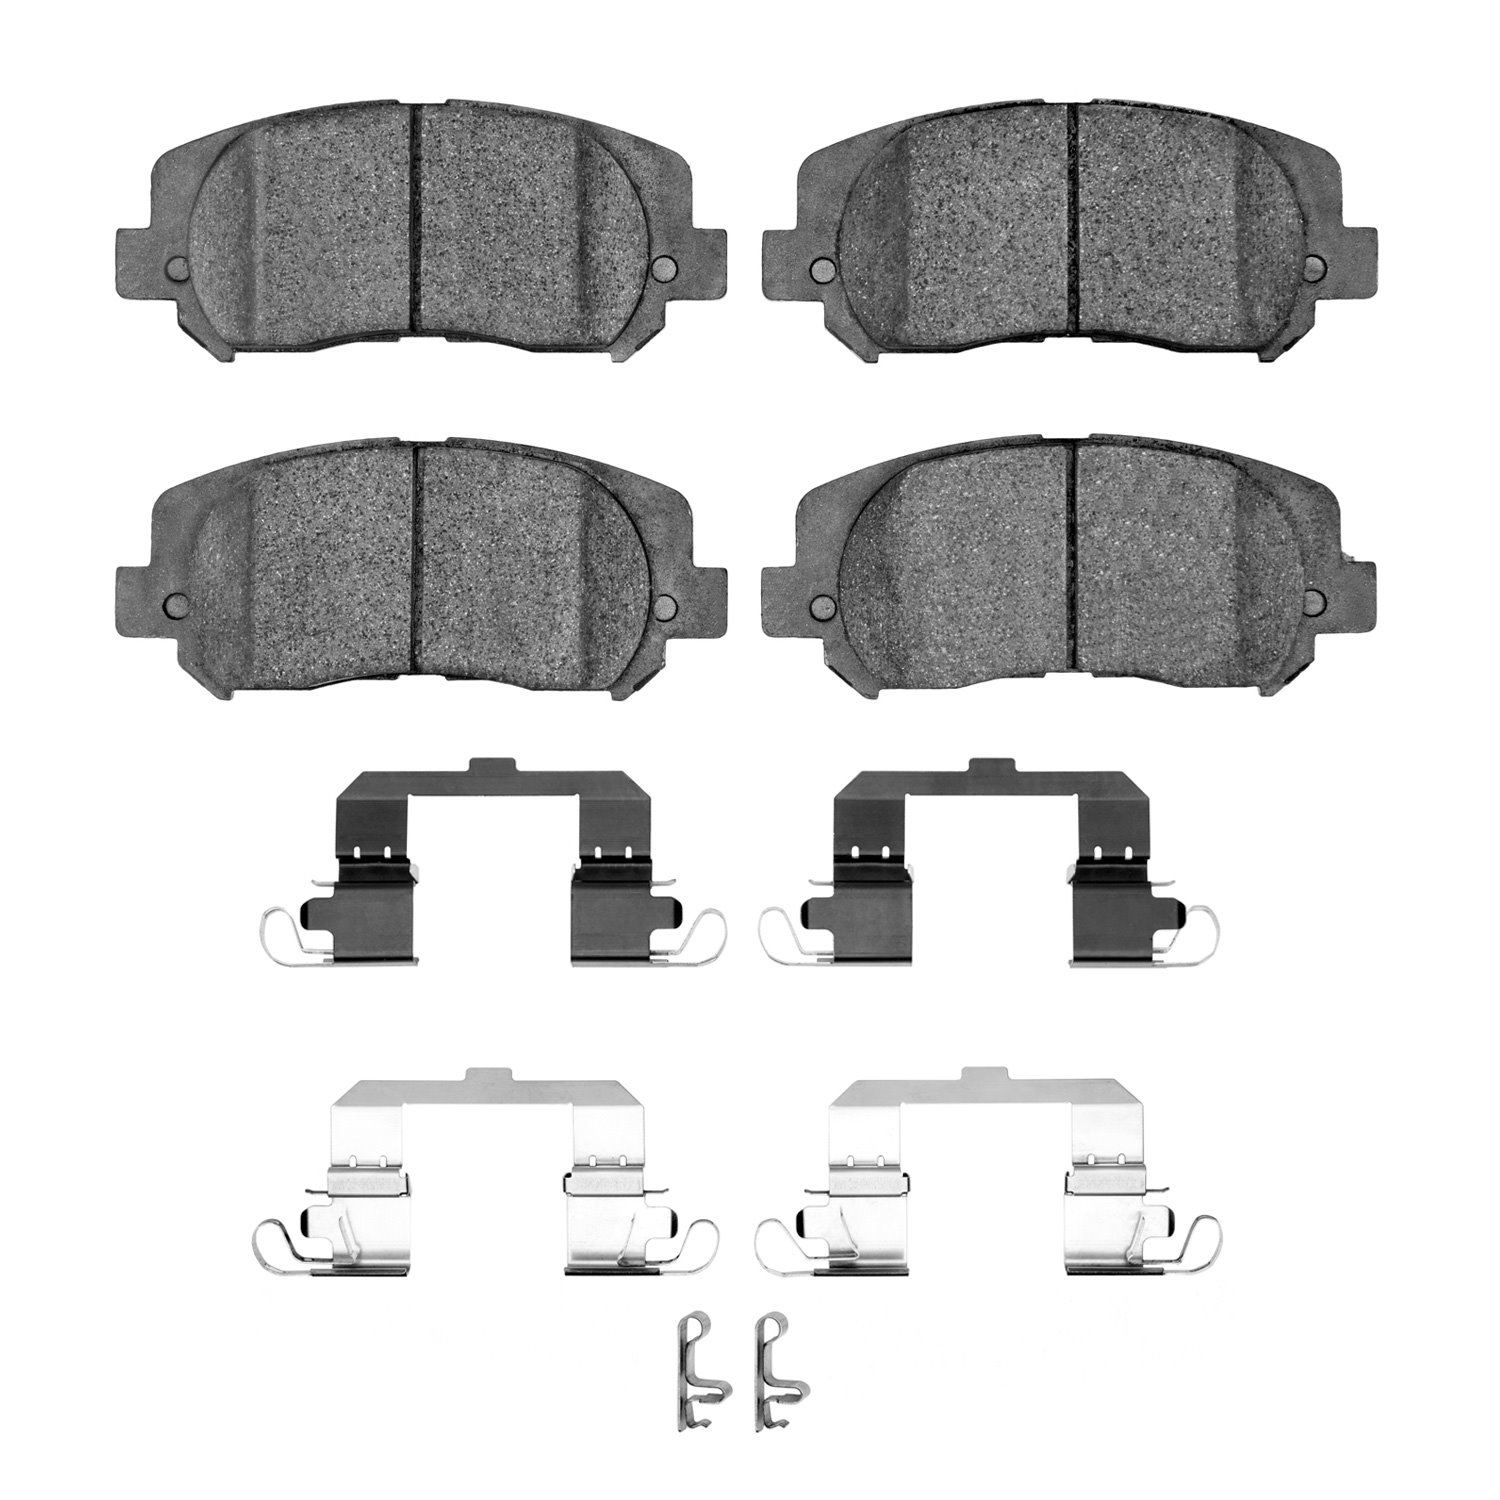 1551-1640-12 5000 Advanced Ceramic Brake Pads & Hardware Kit, Fits Select Mopar, Position: Front